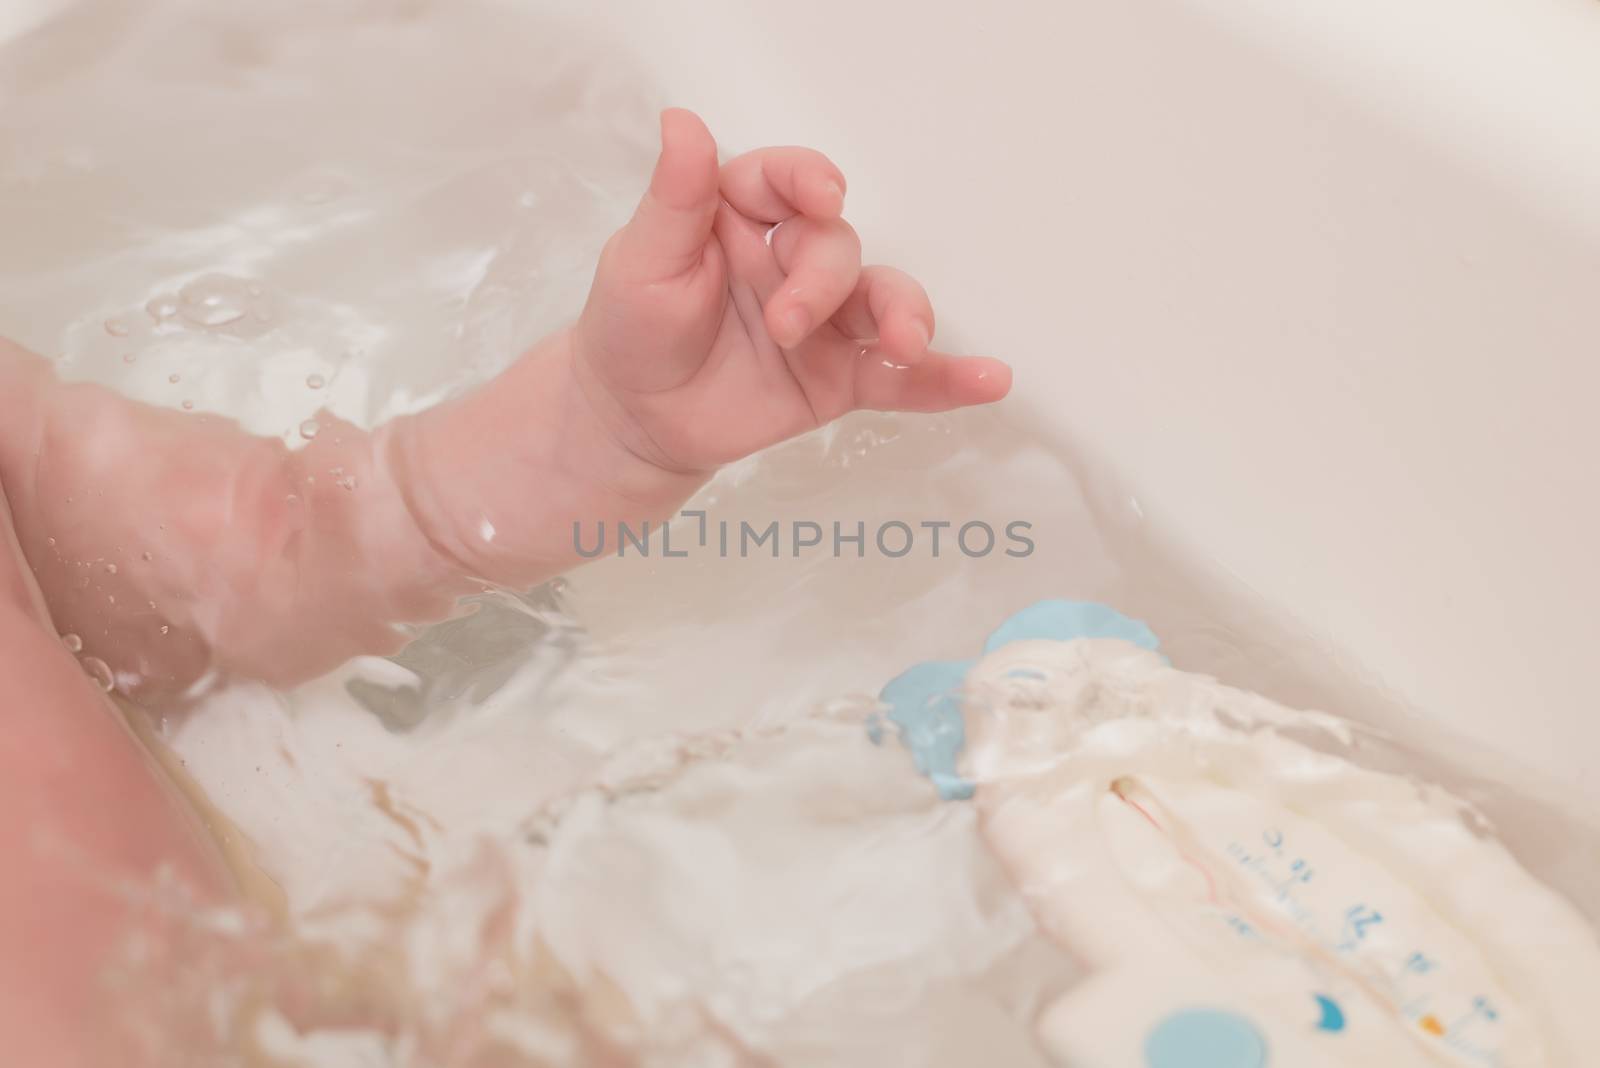 Cute baby having bath in white tub by jcdiazhidalgo